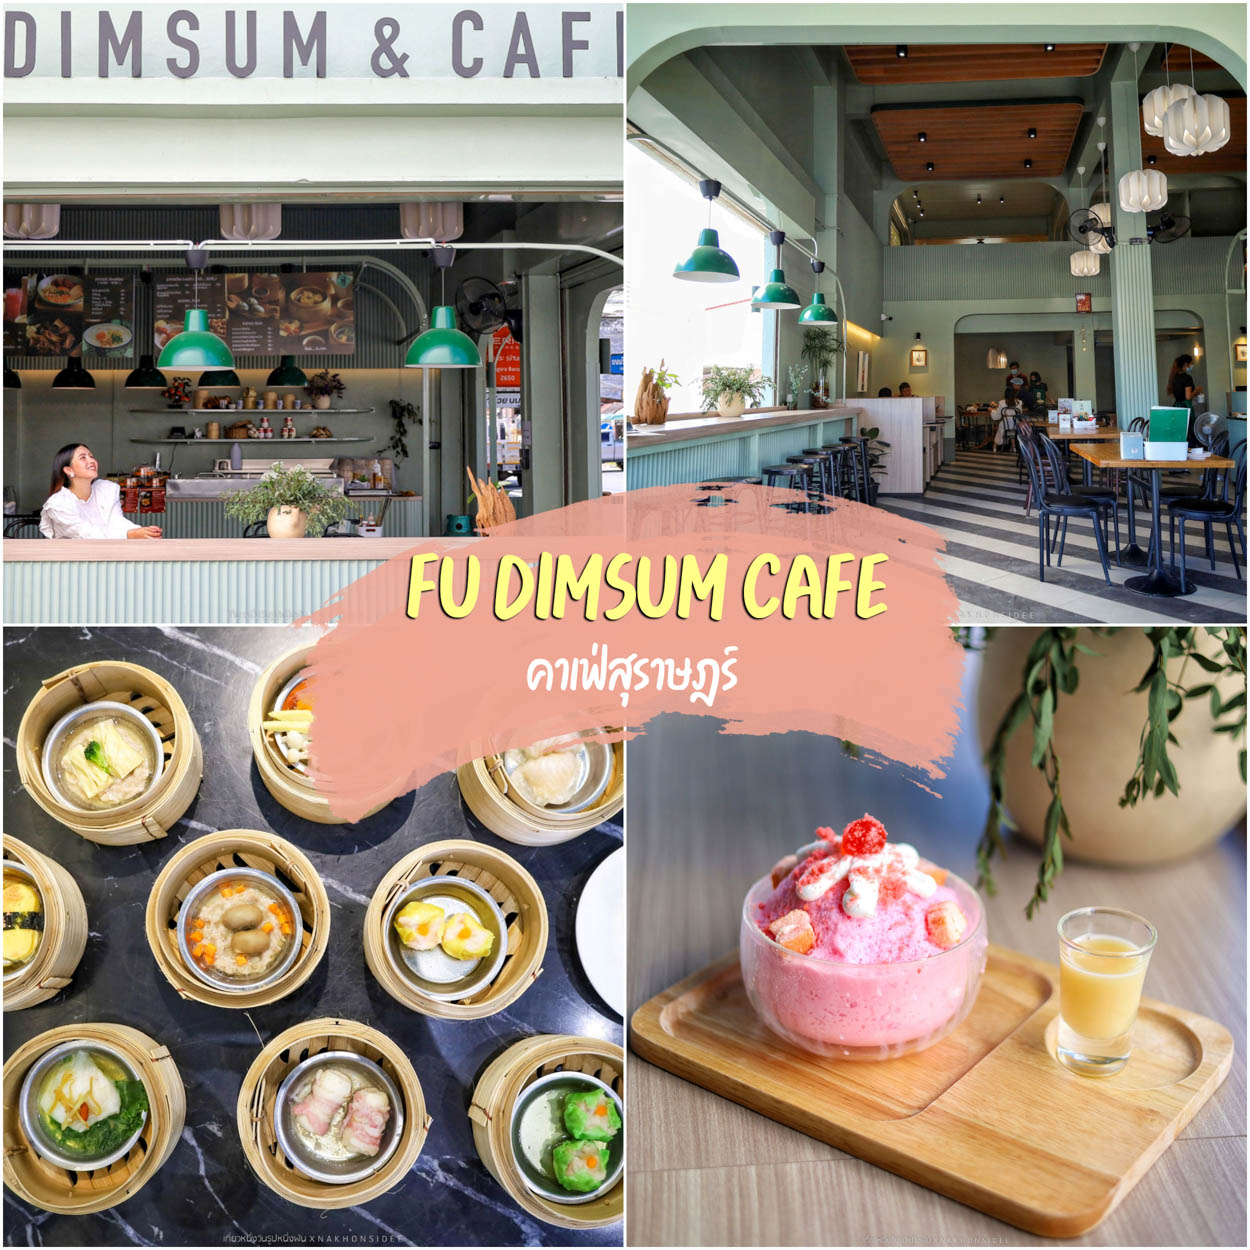 Fu Dimsum and Cafe - ฟู่ติ่มซำแอนด์คาเฟ่ สุราษฎร์ ติ่มซำสไตล์คาเฟ่ เมนูเยอะมากกก เด็ดเพียบ